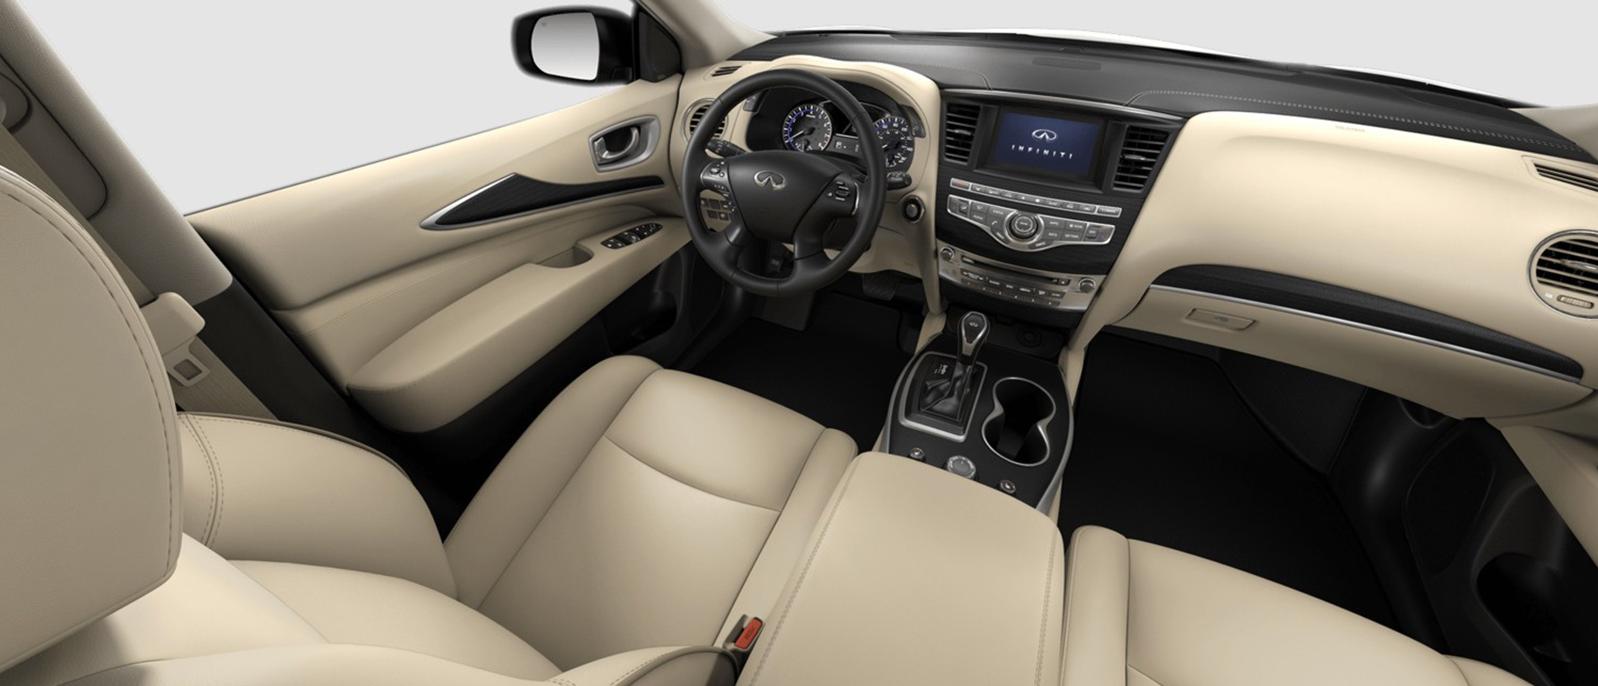 INFINITI QX60 Pure trim interior in Wheat color scheme.